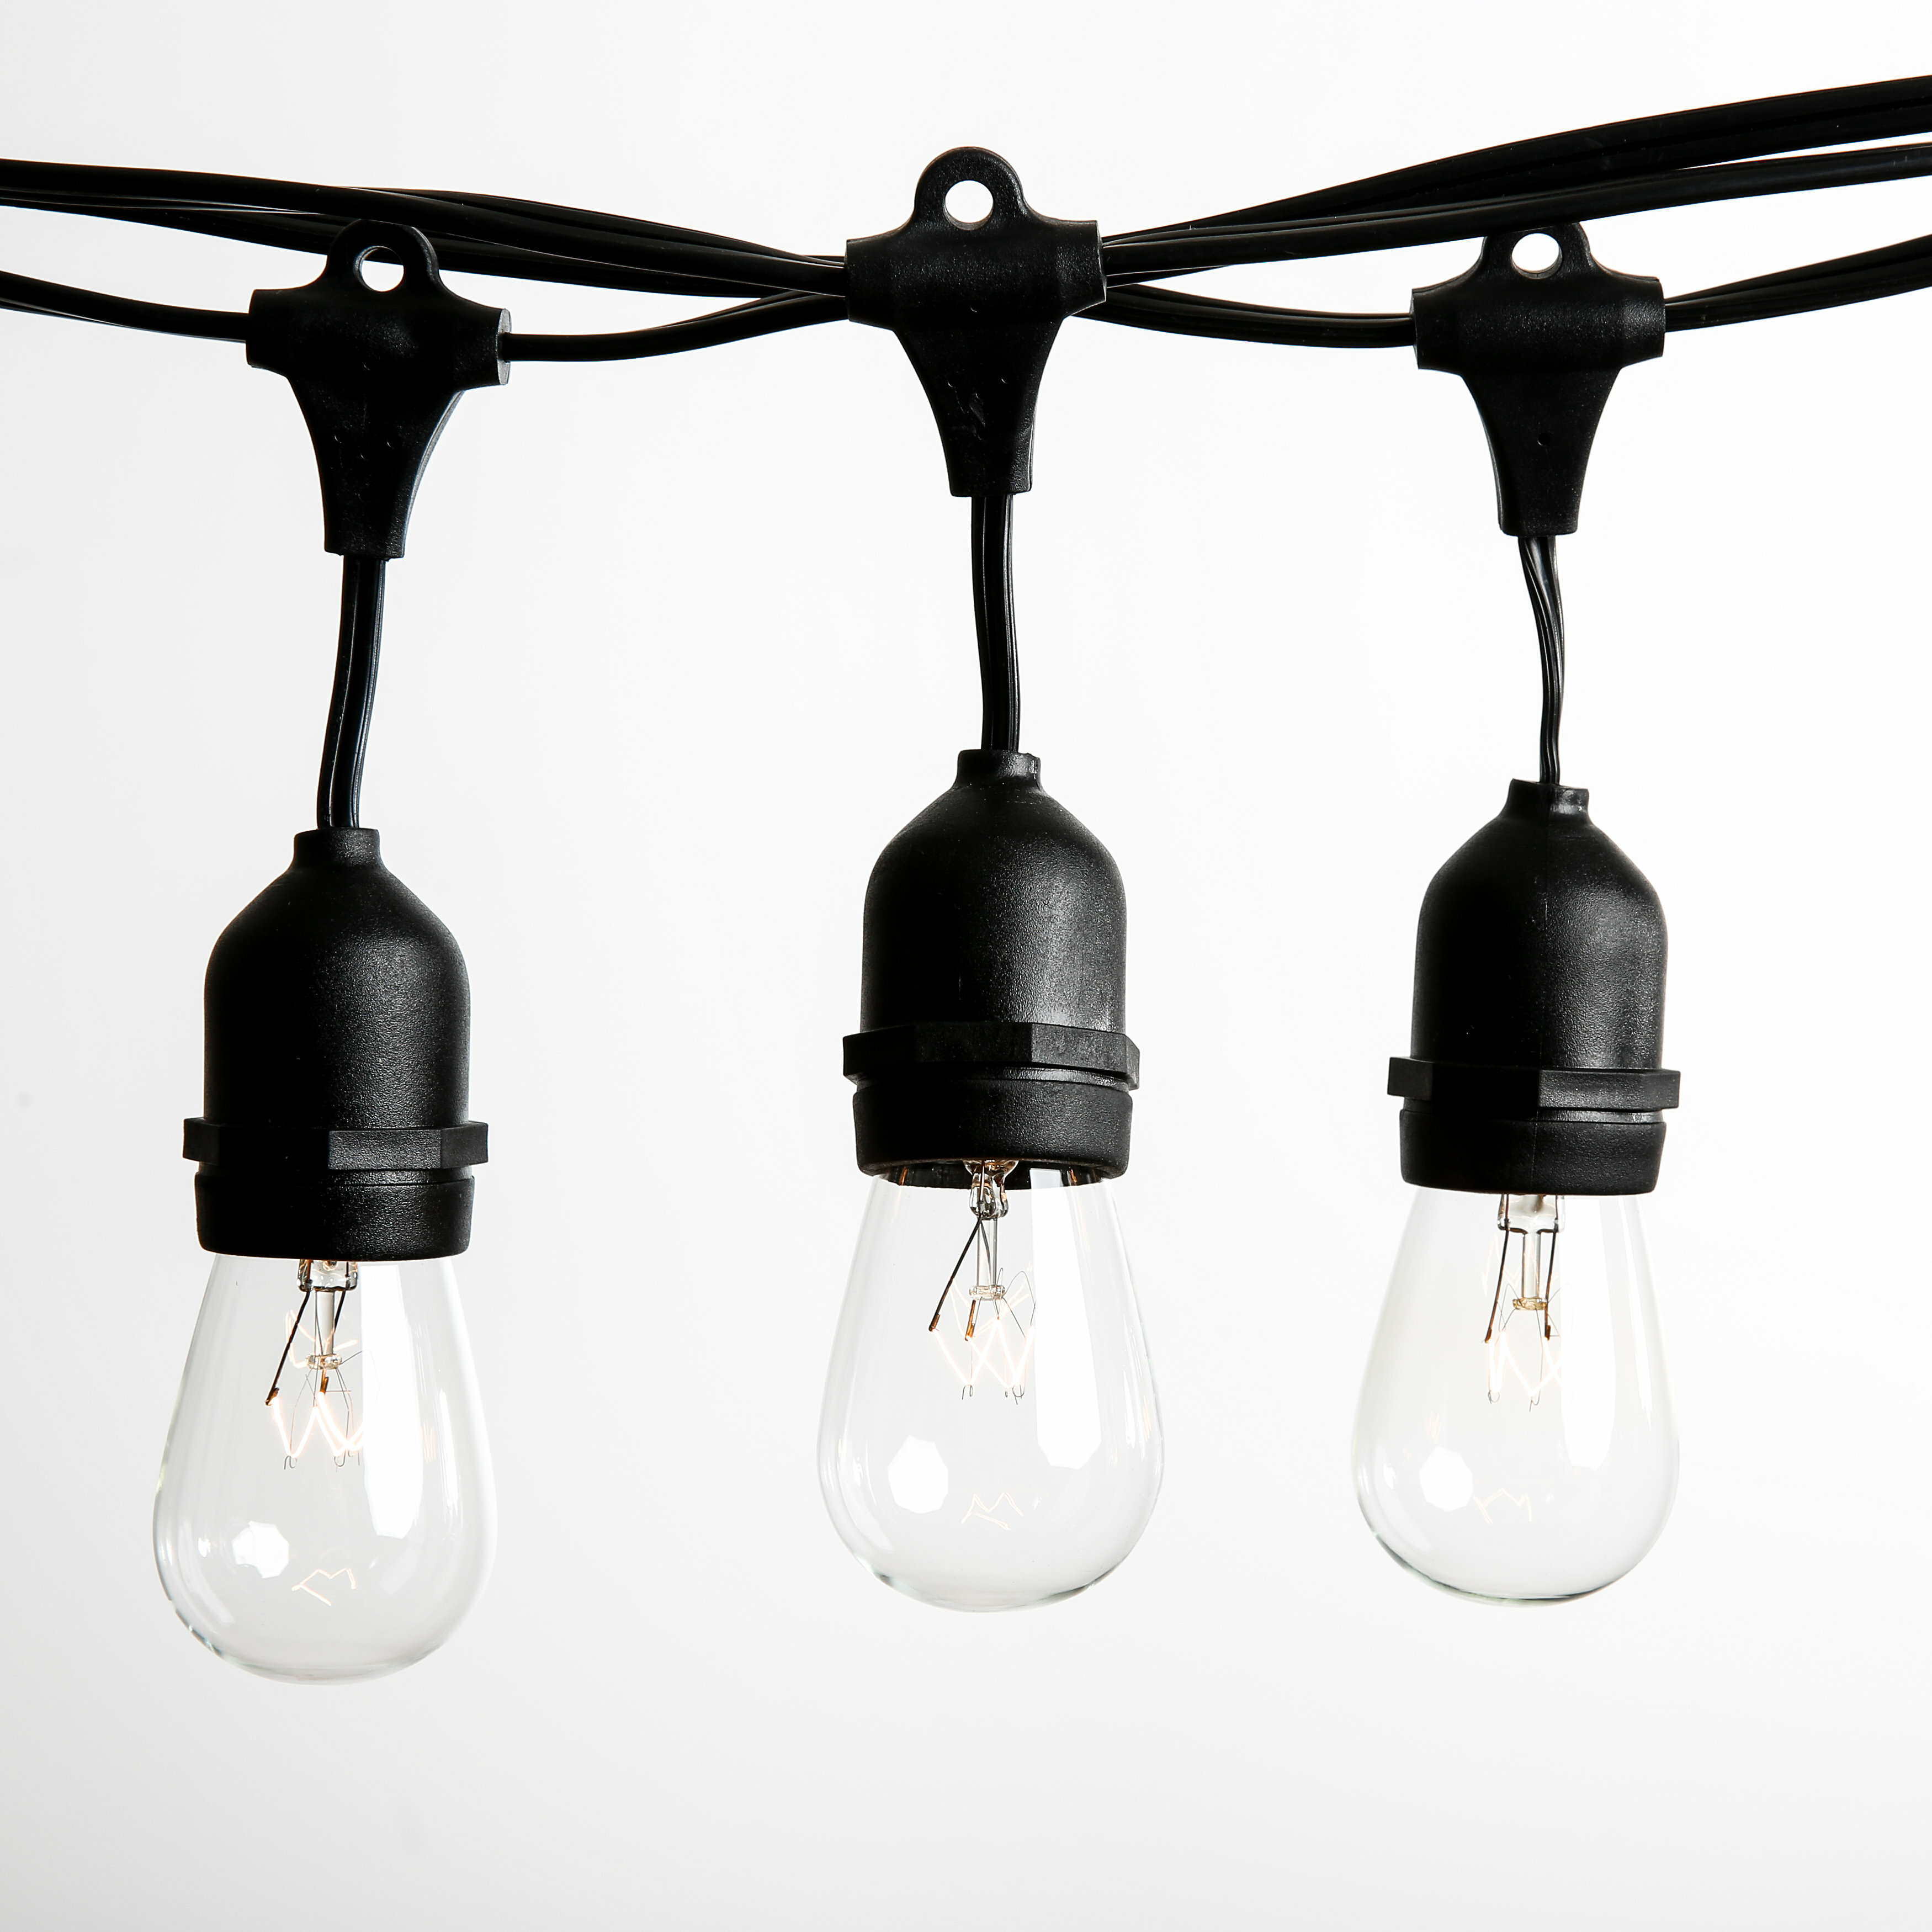 28 Bulbs NEW 50 ft 25 Sockets Black Outdoor 14 Gauge Edison Metro String Lights